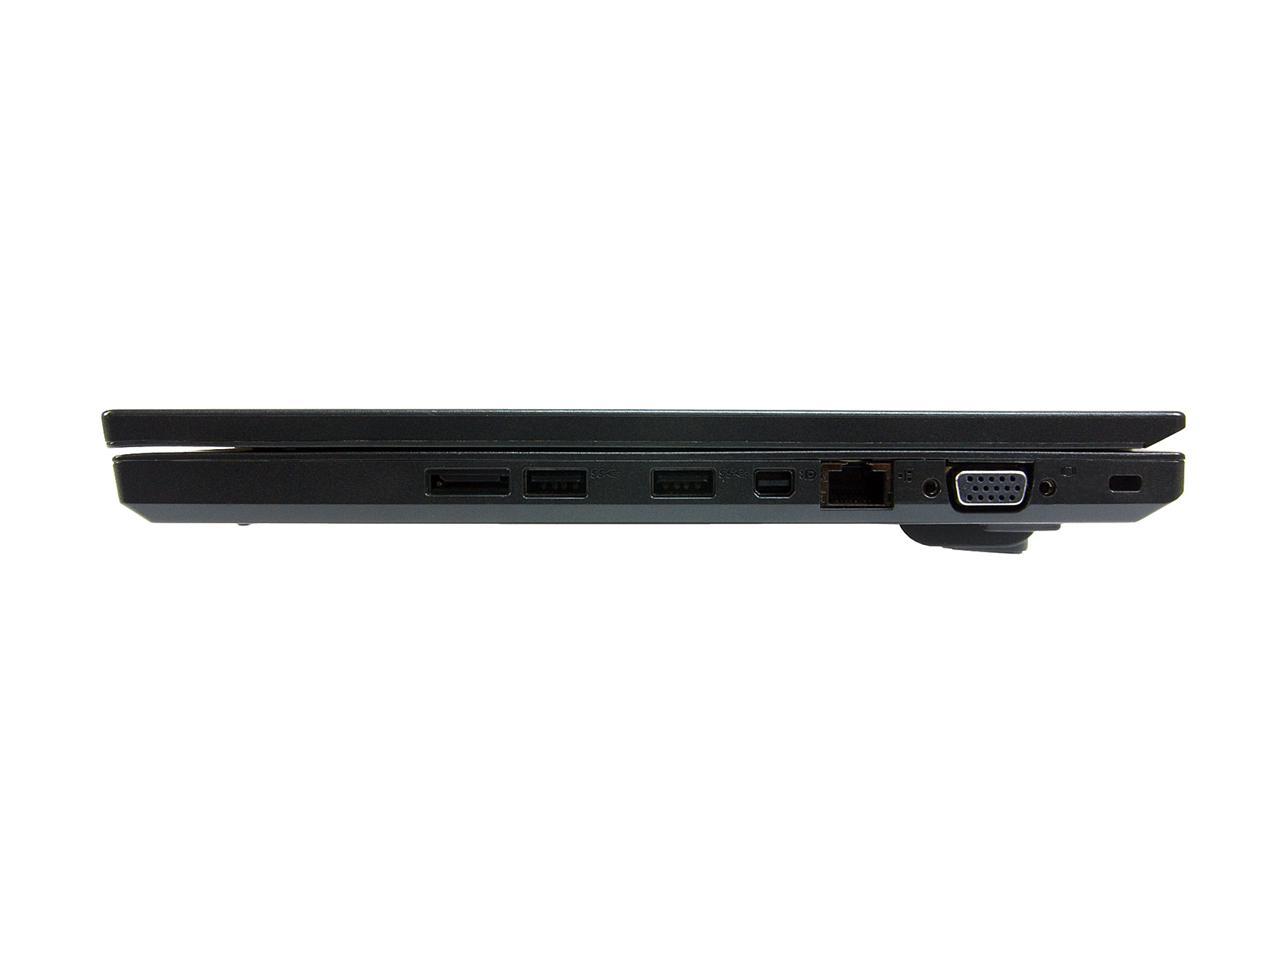 Lenovo Grade B Laptop L460 Intel Core i5 6300U (2.40 GHz) 8 GB Memory 128 GB SSD 14.0" Windows 10